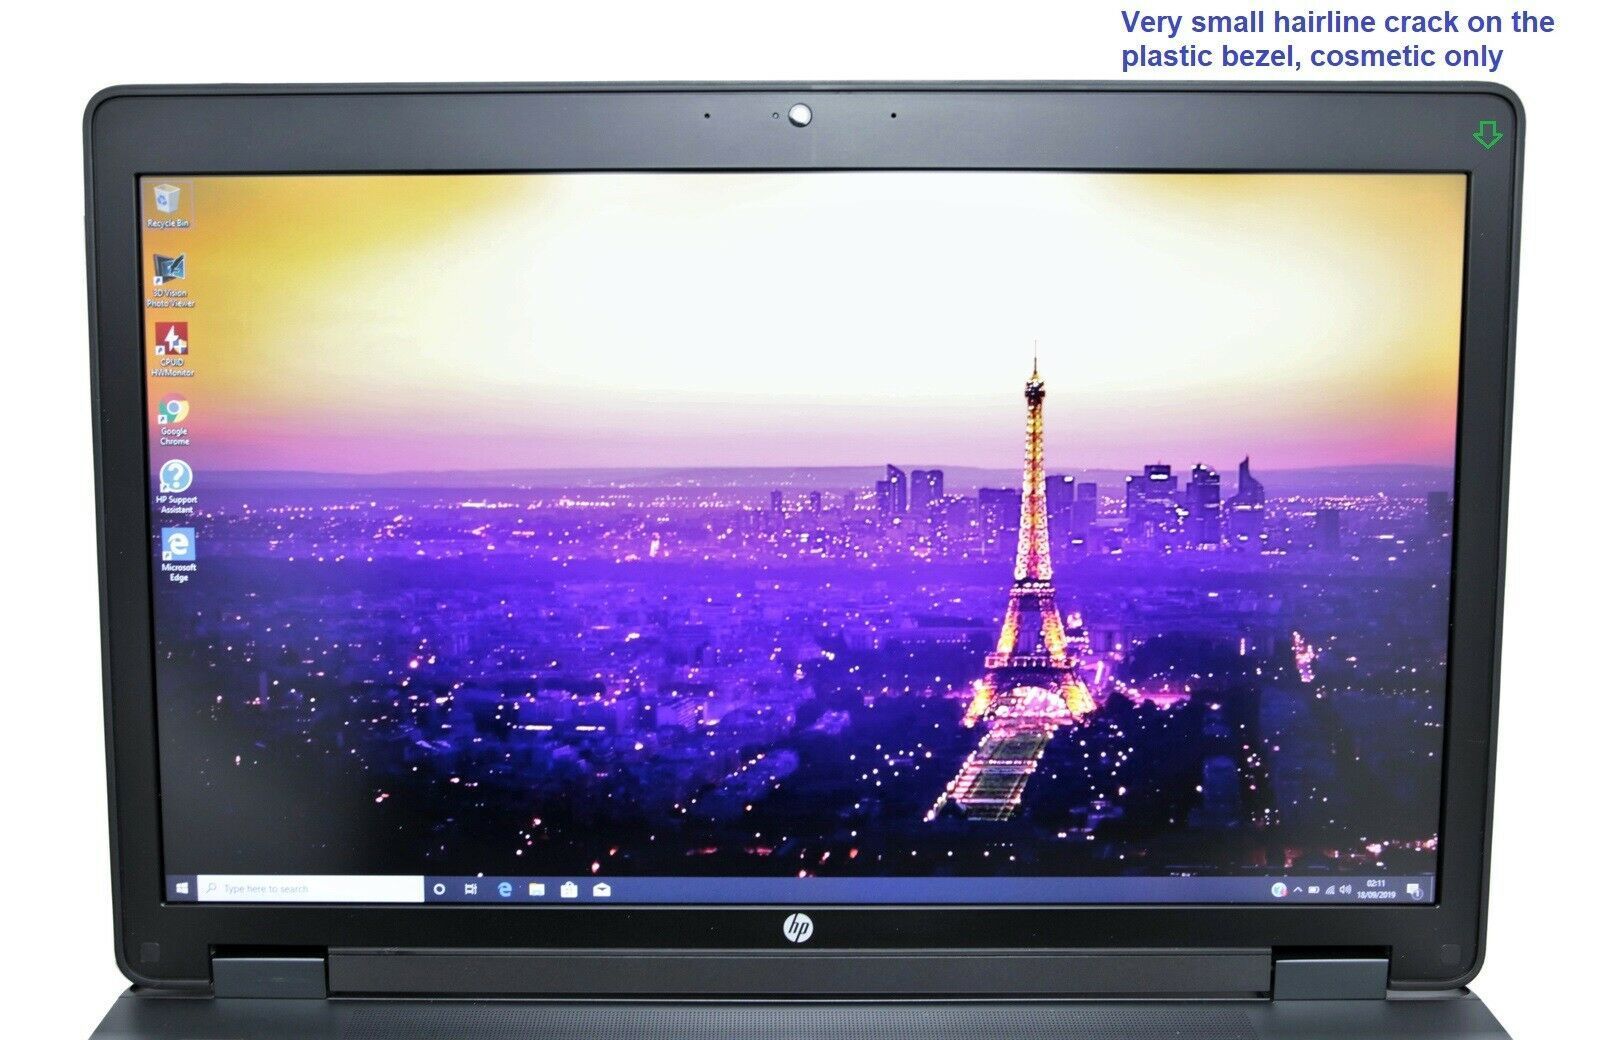 HP ZBook 17 CAD Laptop: Core i7-4800MQ, 16GB RAM, 240GB, Quadro K3100M - CruiseTech